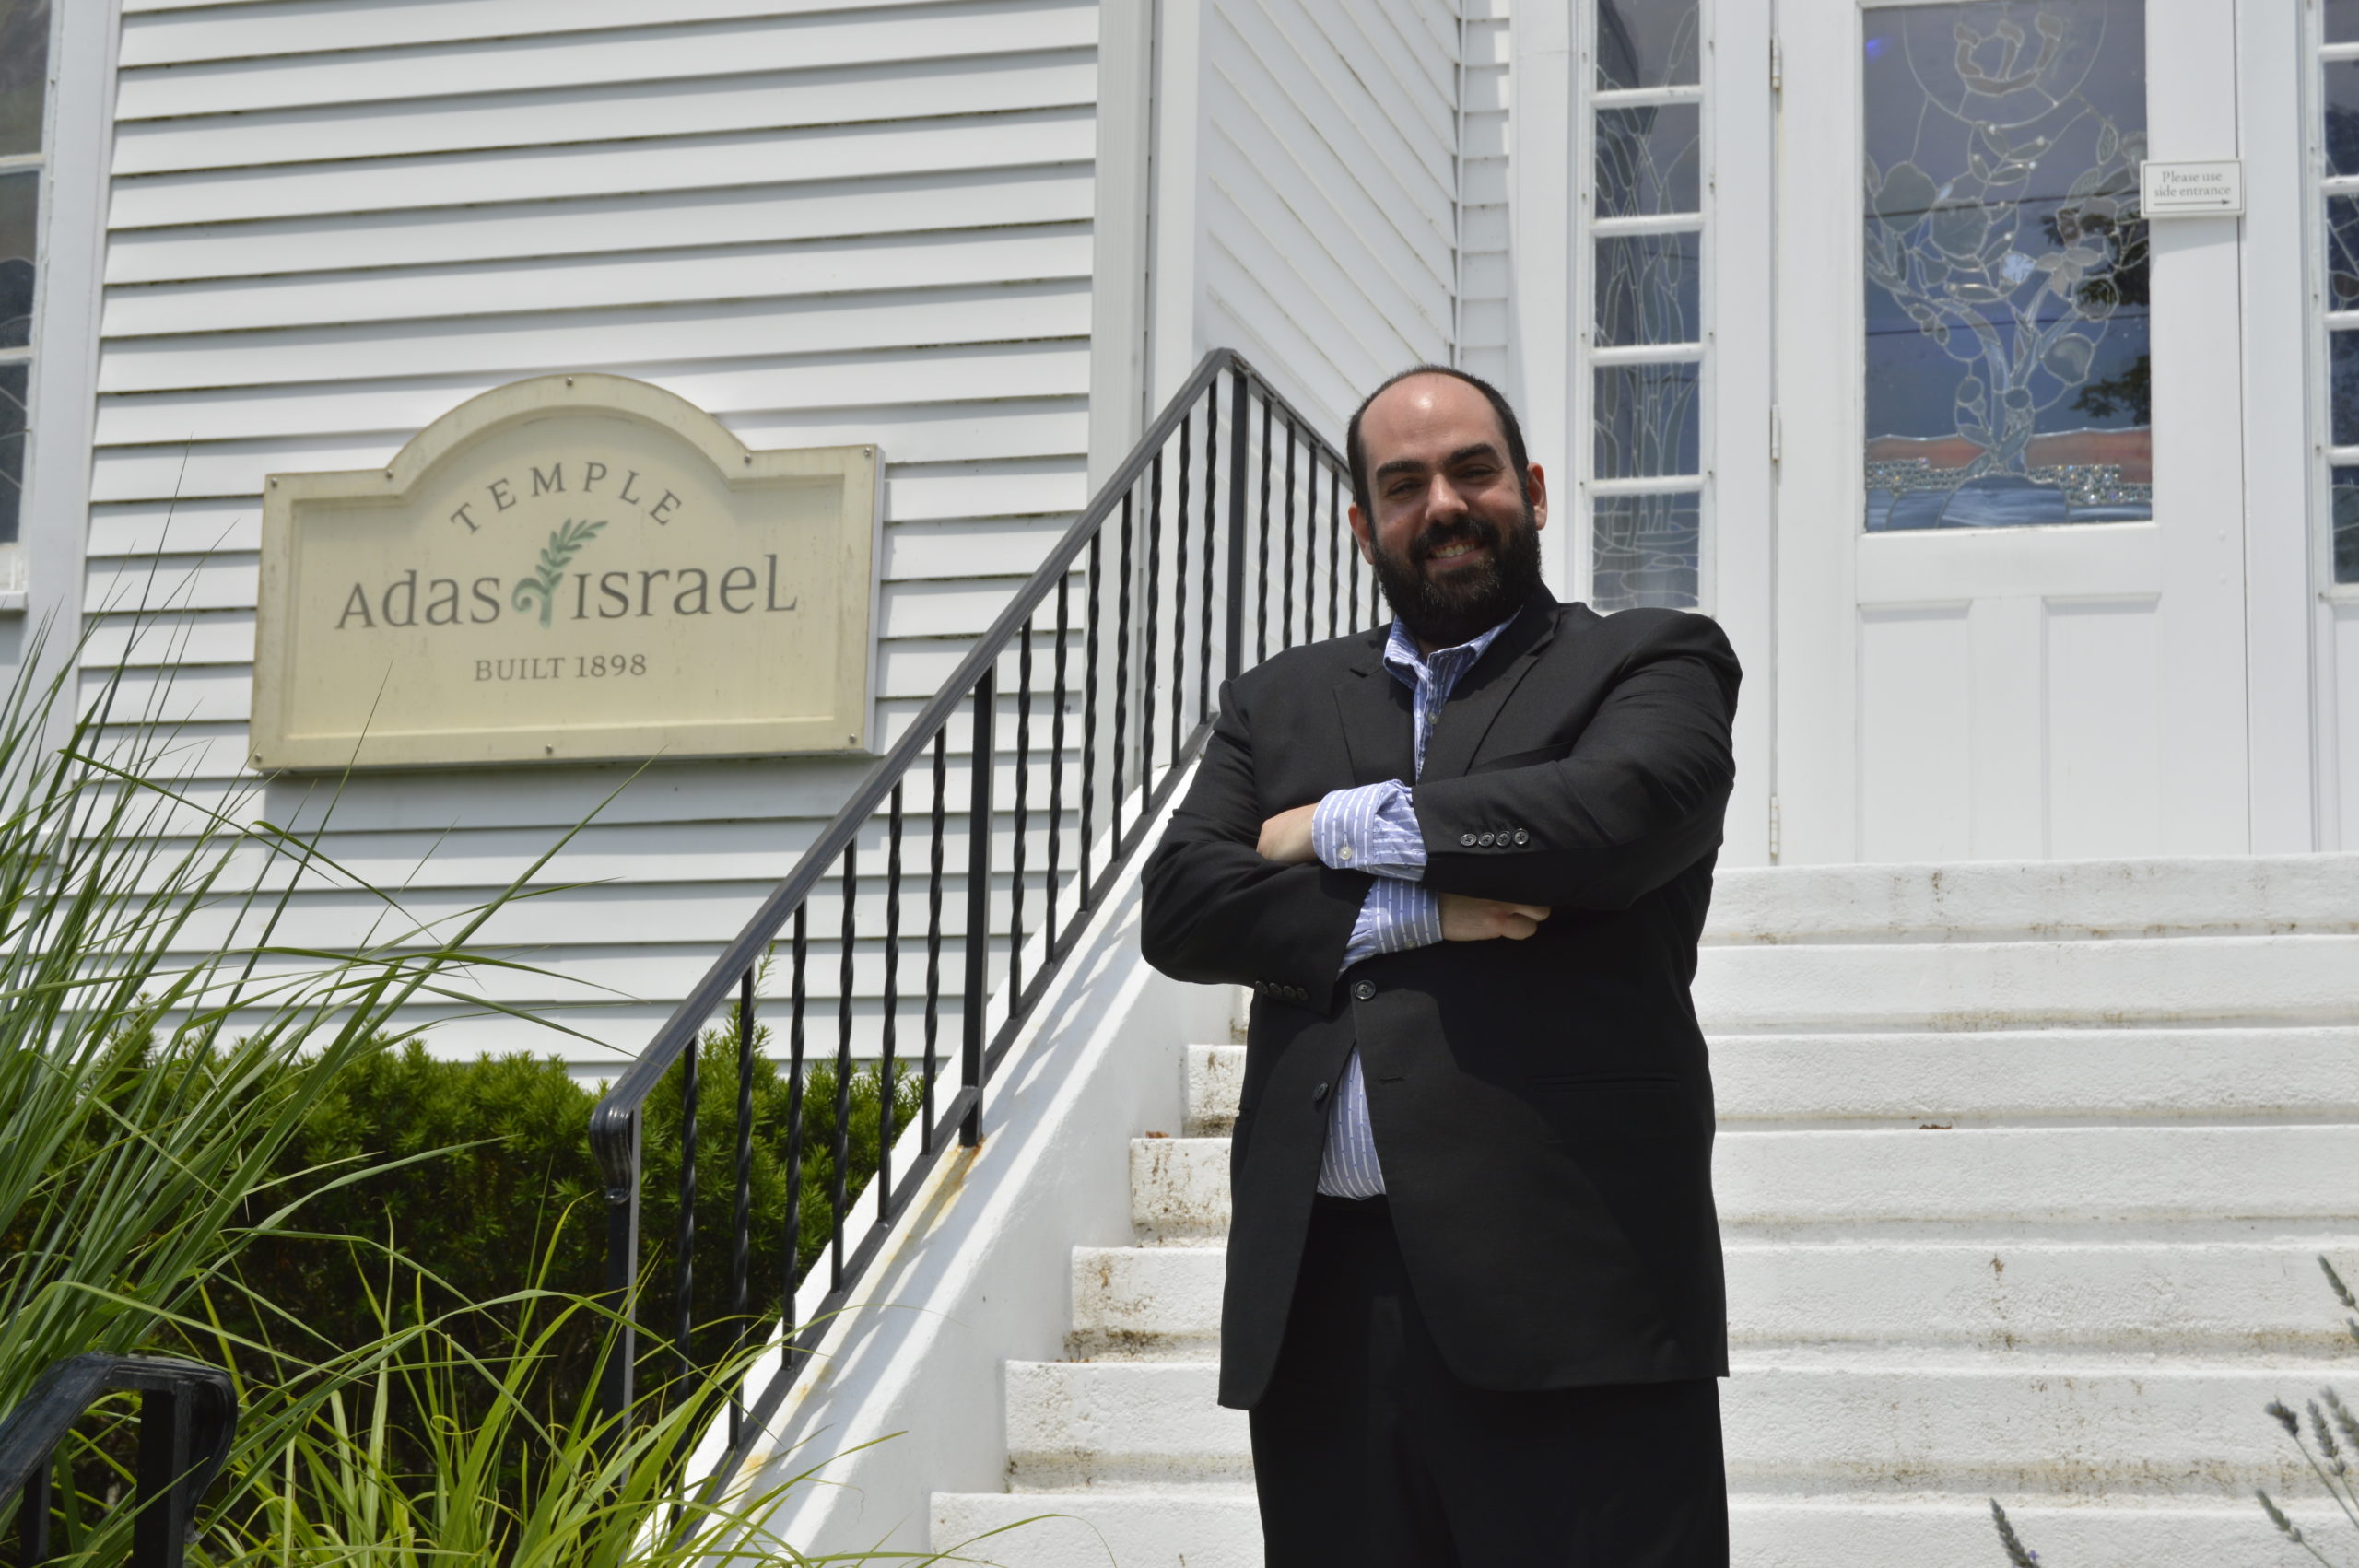 Rabbi Dan Geffen from Temple Adas Israel in Sag Harbor.